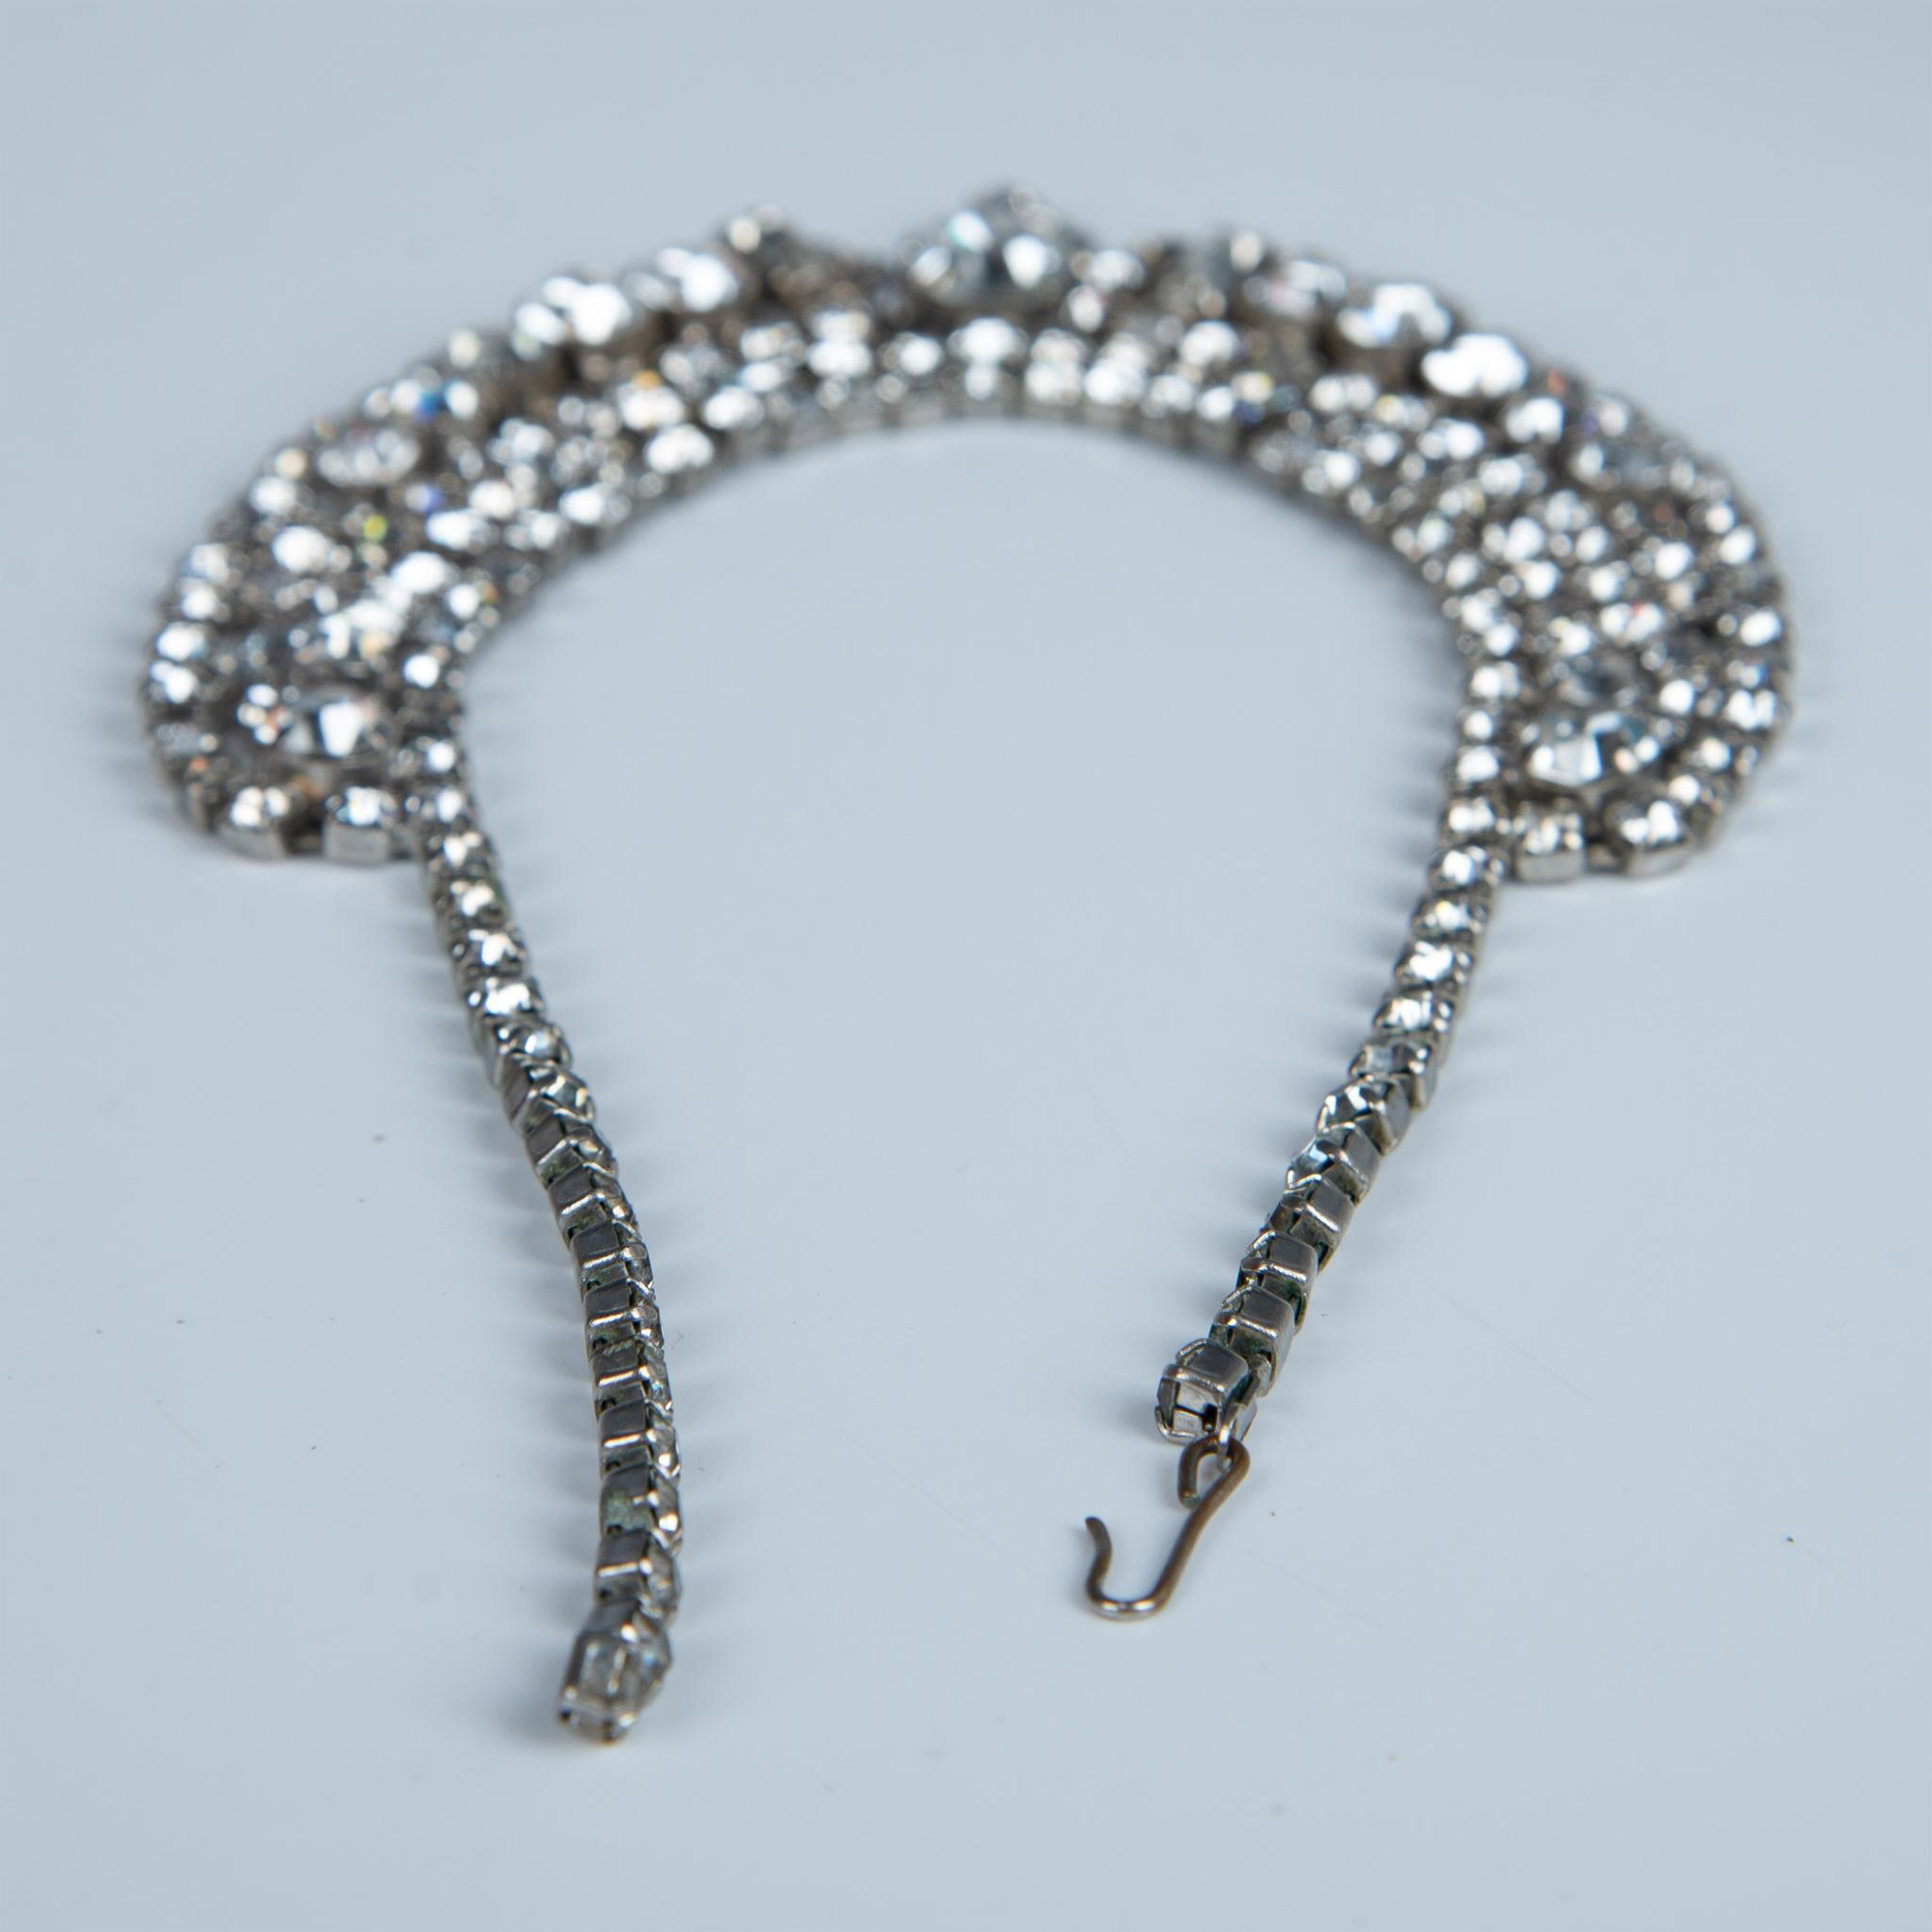 Stunning Silver Metal Rhinestone Choker Necklace - Image 3 of 3